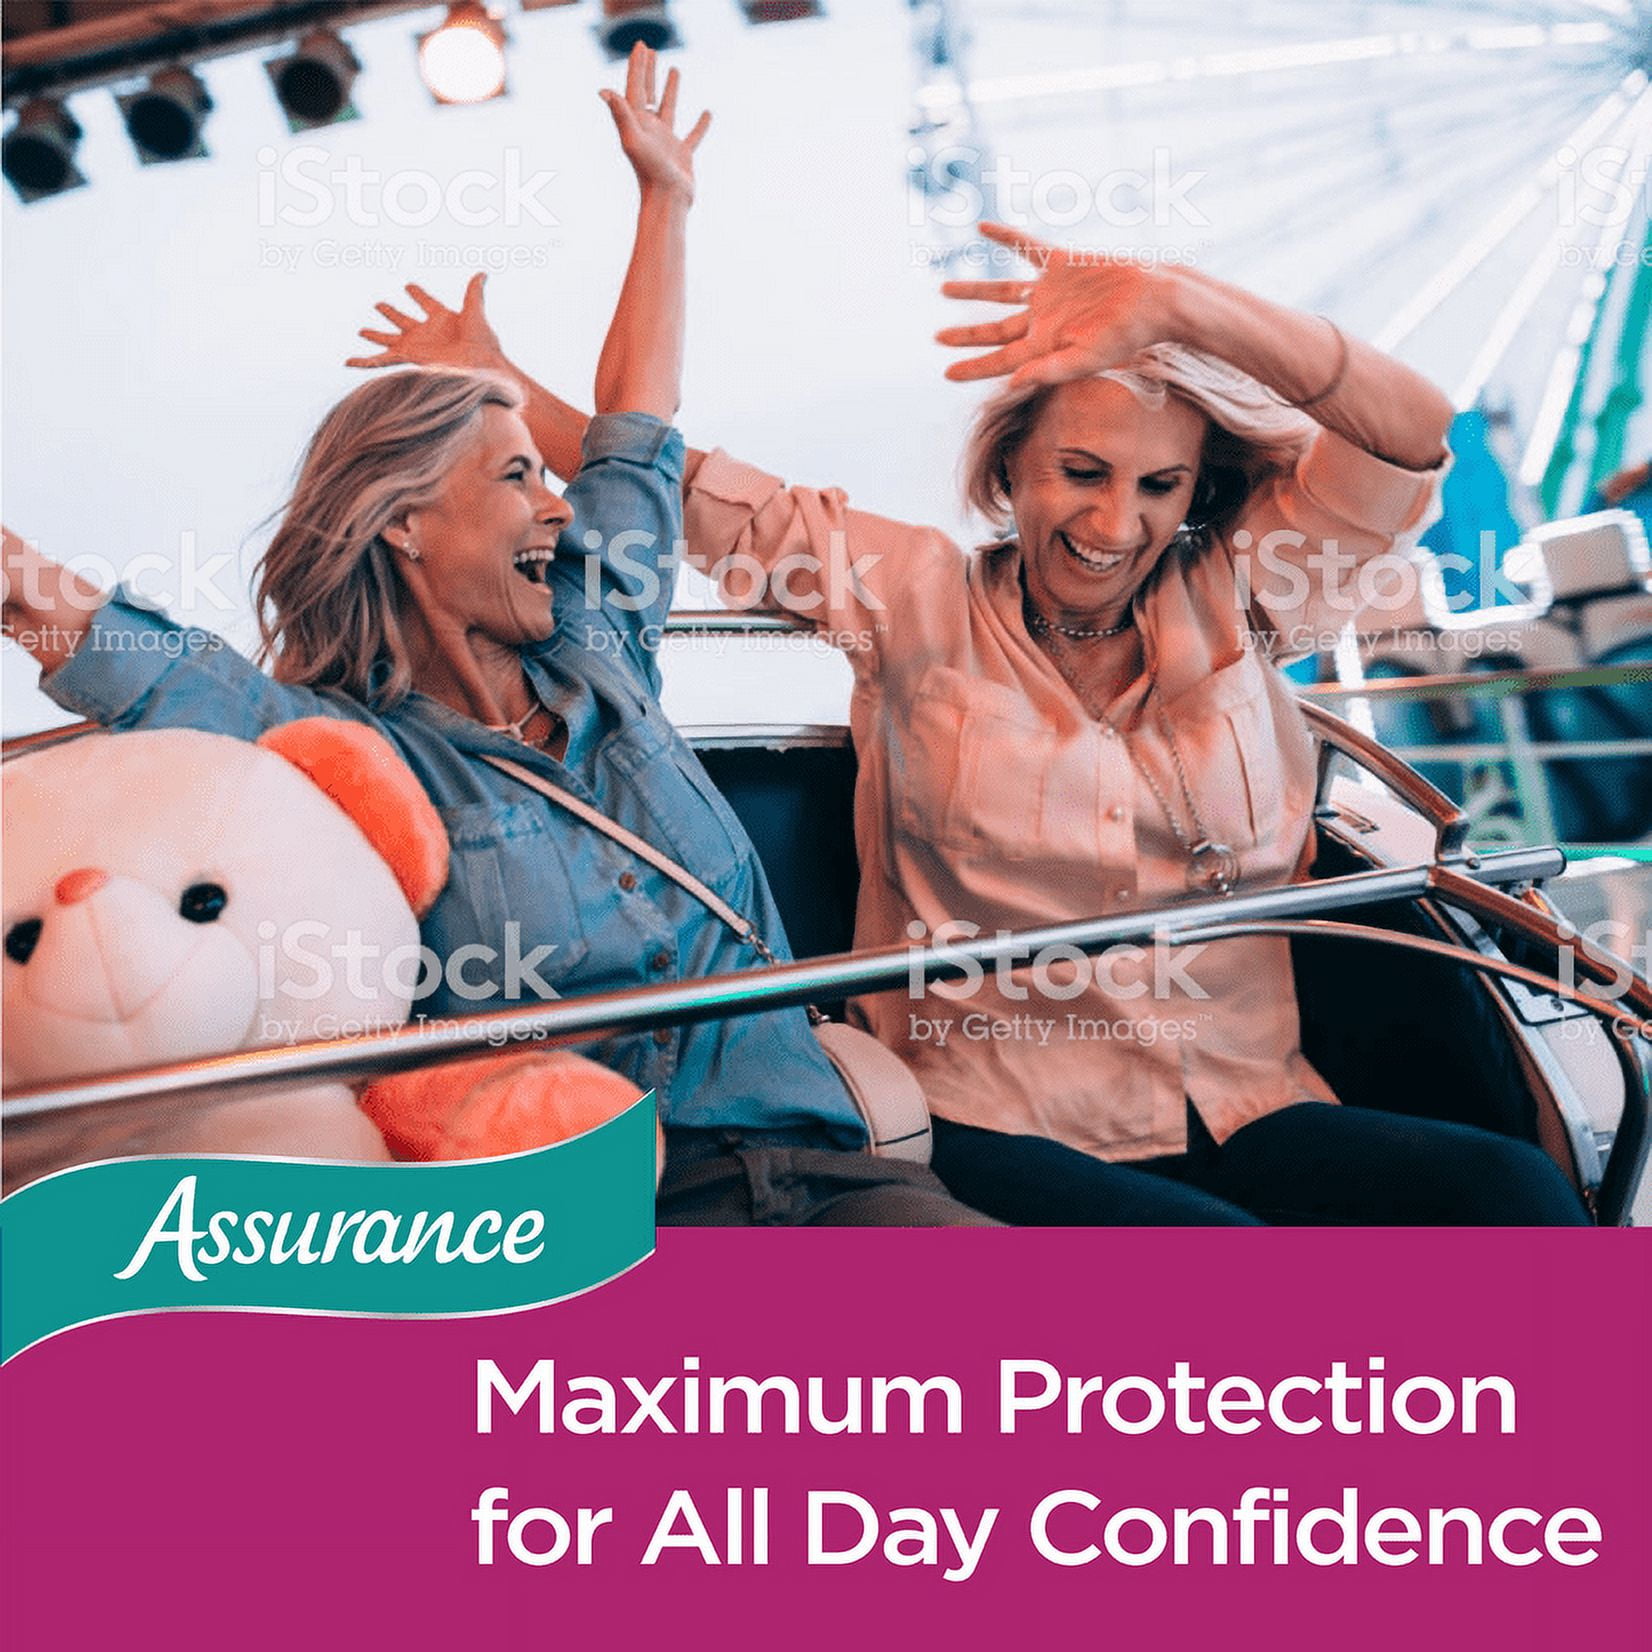 Assurance Incontinence & Postpartum Underwear For Women Maximum Absorbency  S/M 60 Count